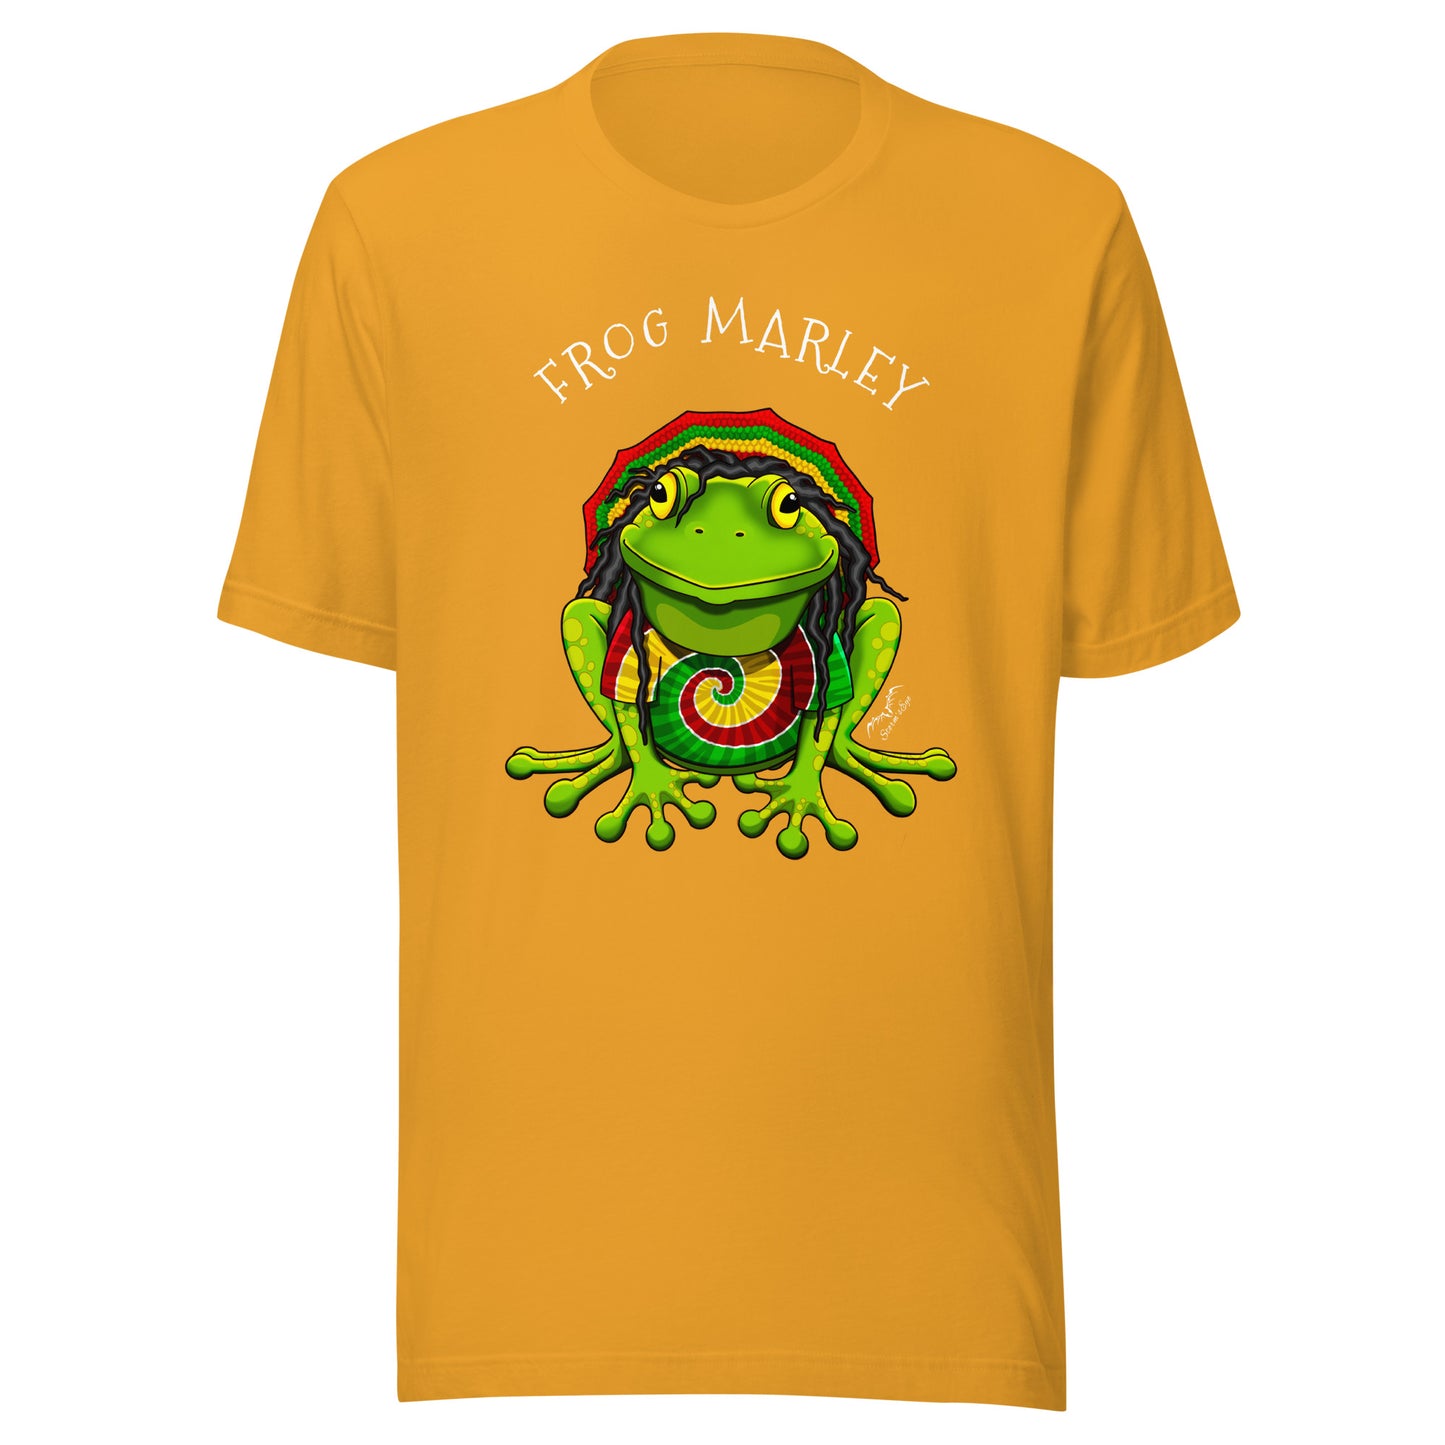 stormseye design frog marley reggae T shirt, flat view yellow